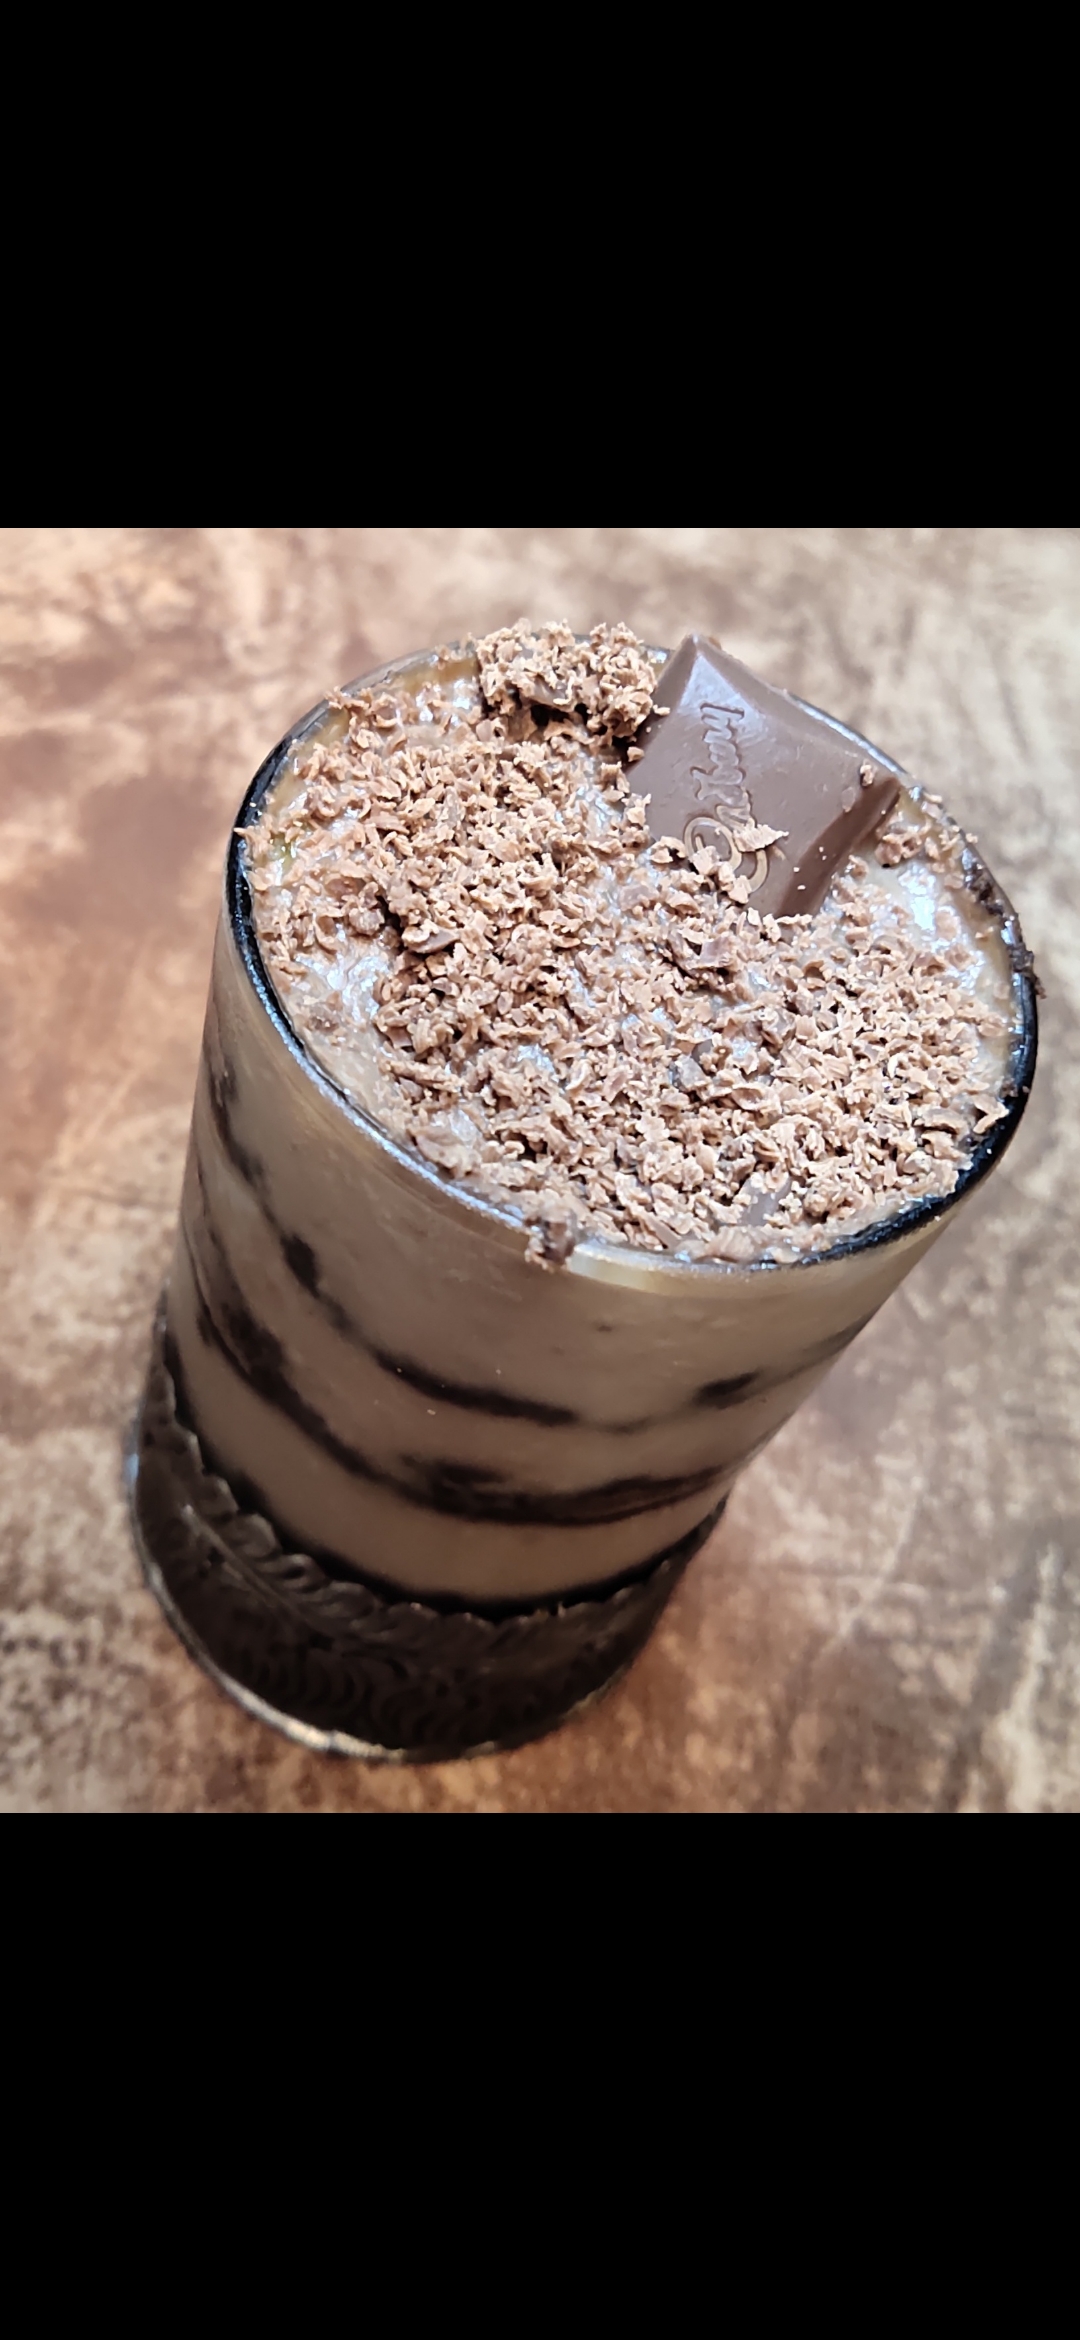 Oreo Chocolate Pudding Recipe - GoToChef